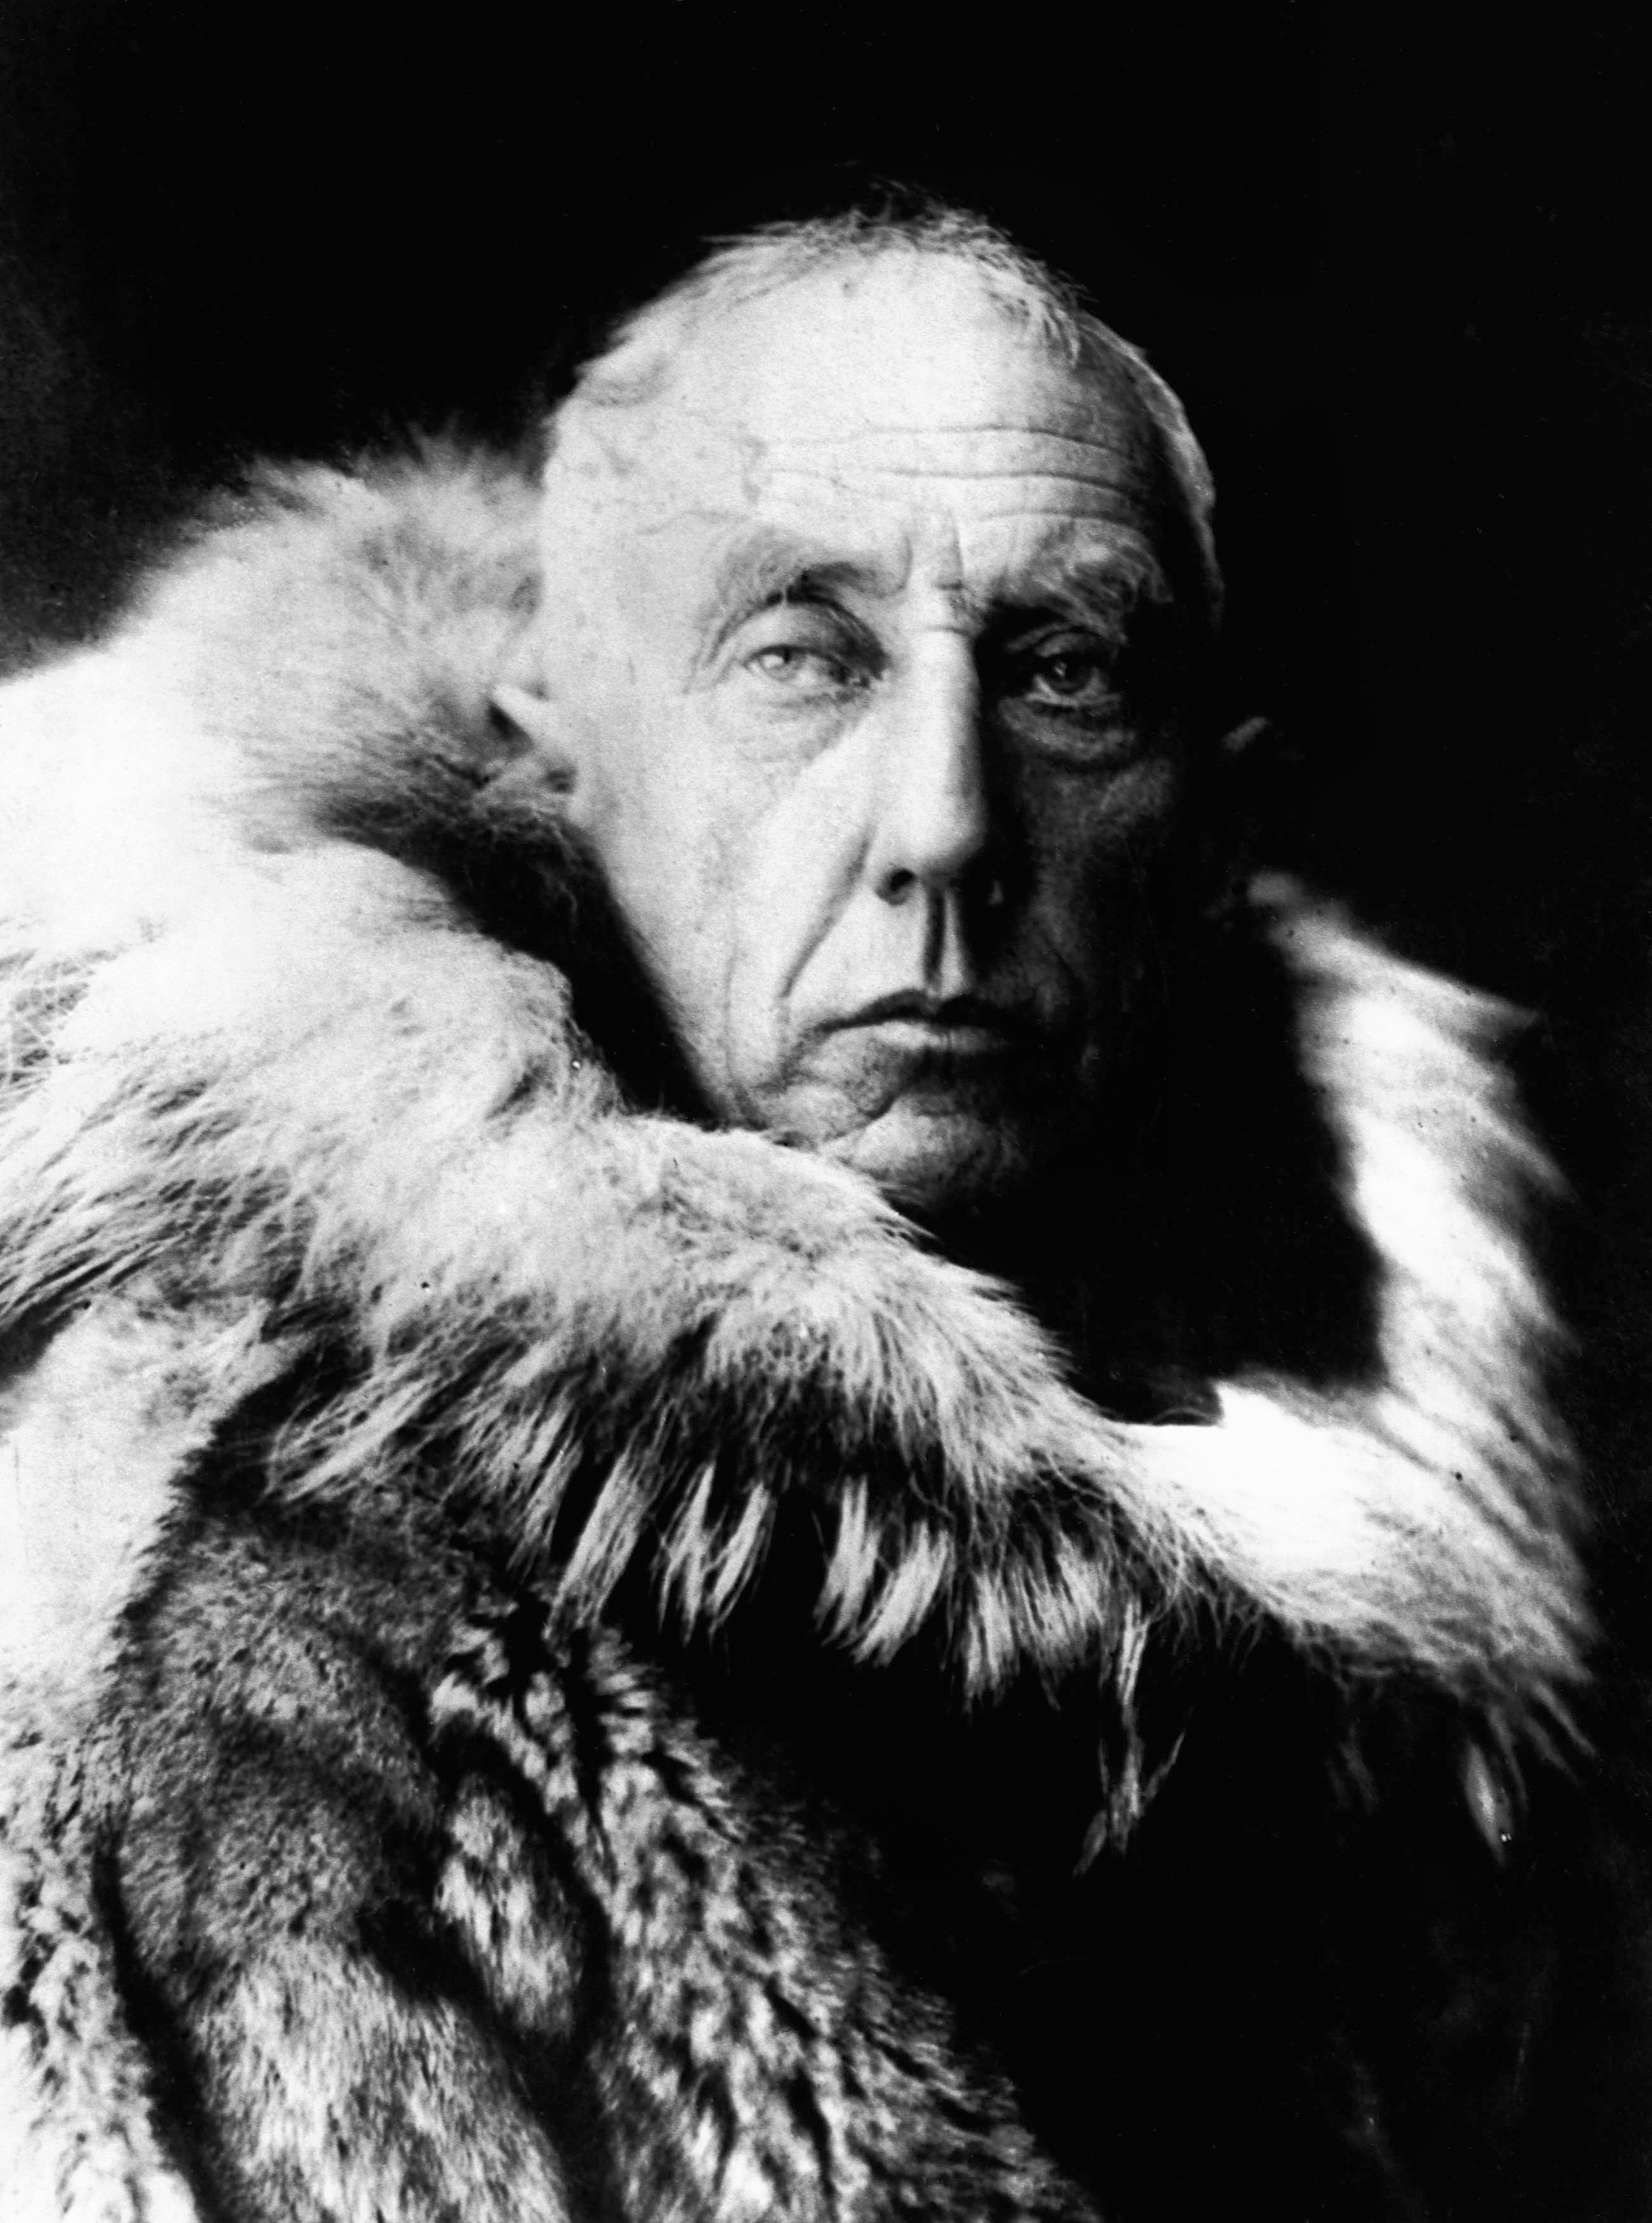  Životopis Roalda Amundsena